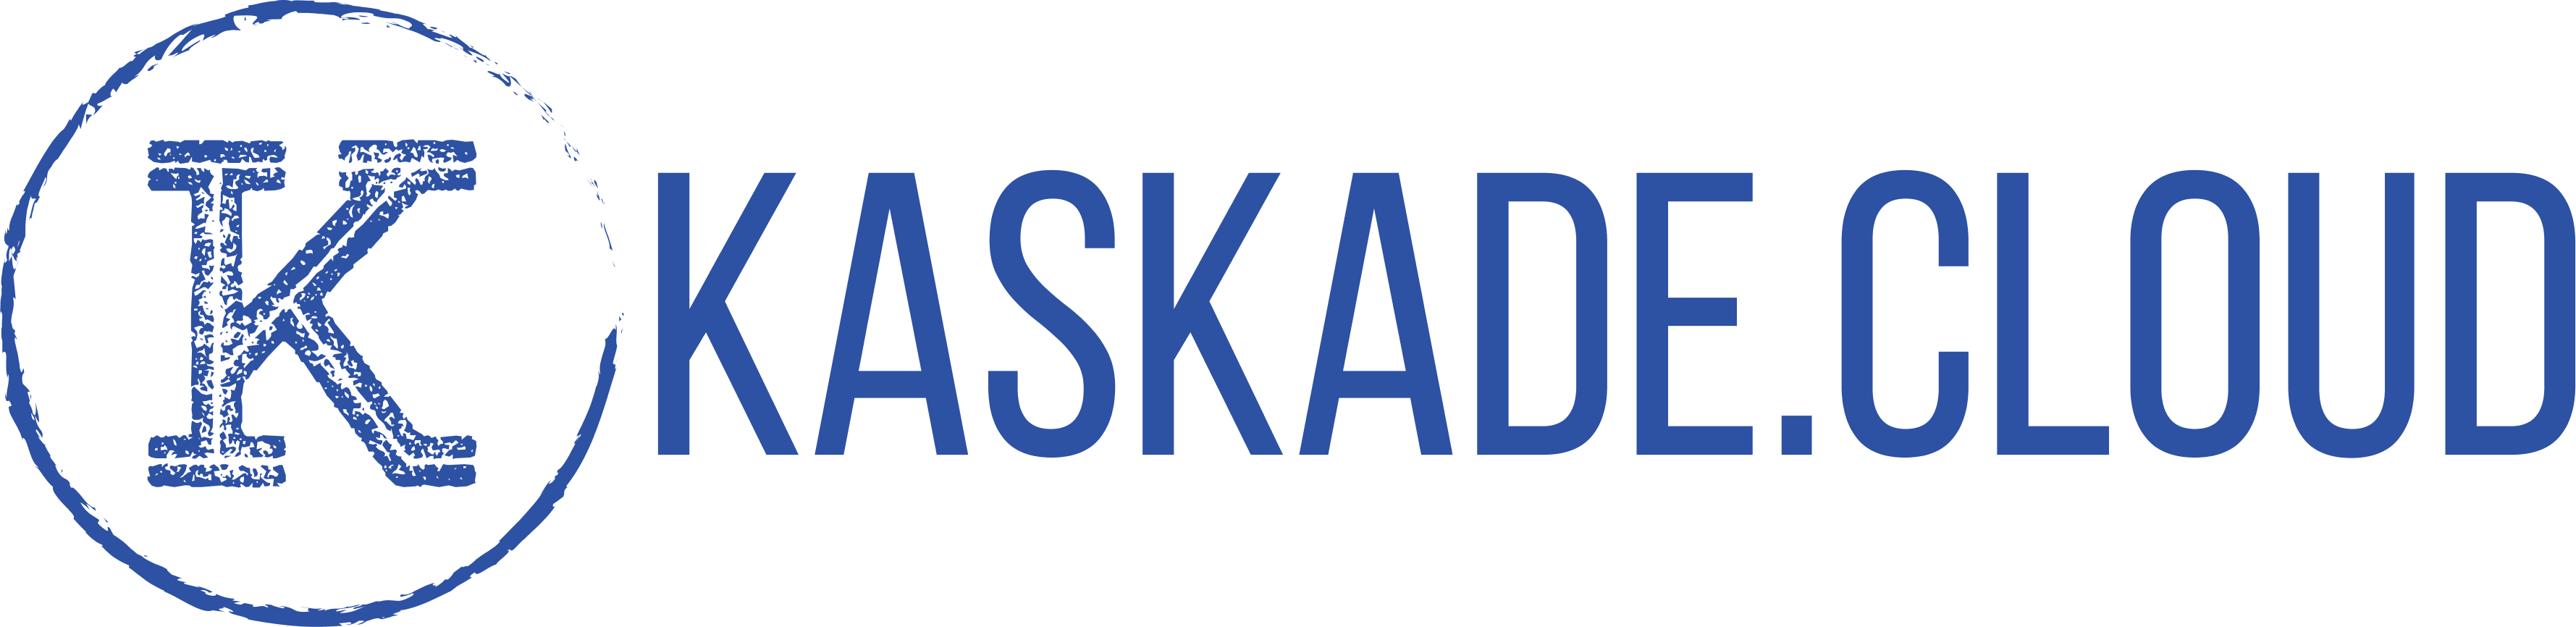 Kaskade Logo - Kaskade.Cloud | CloudHealth by VMware